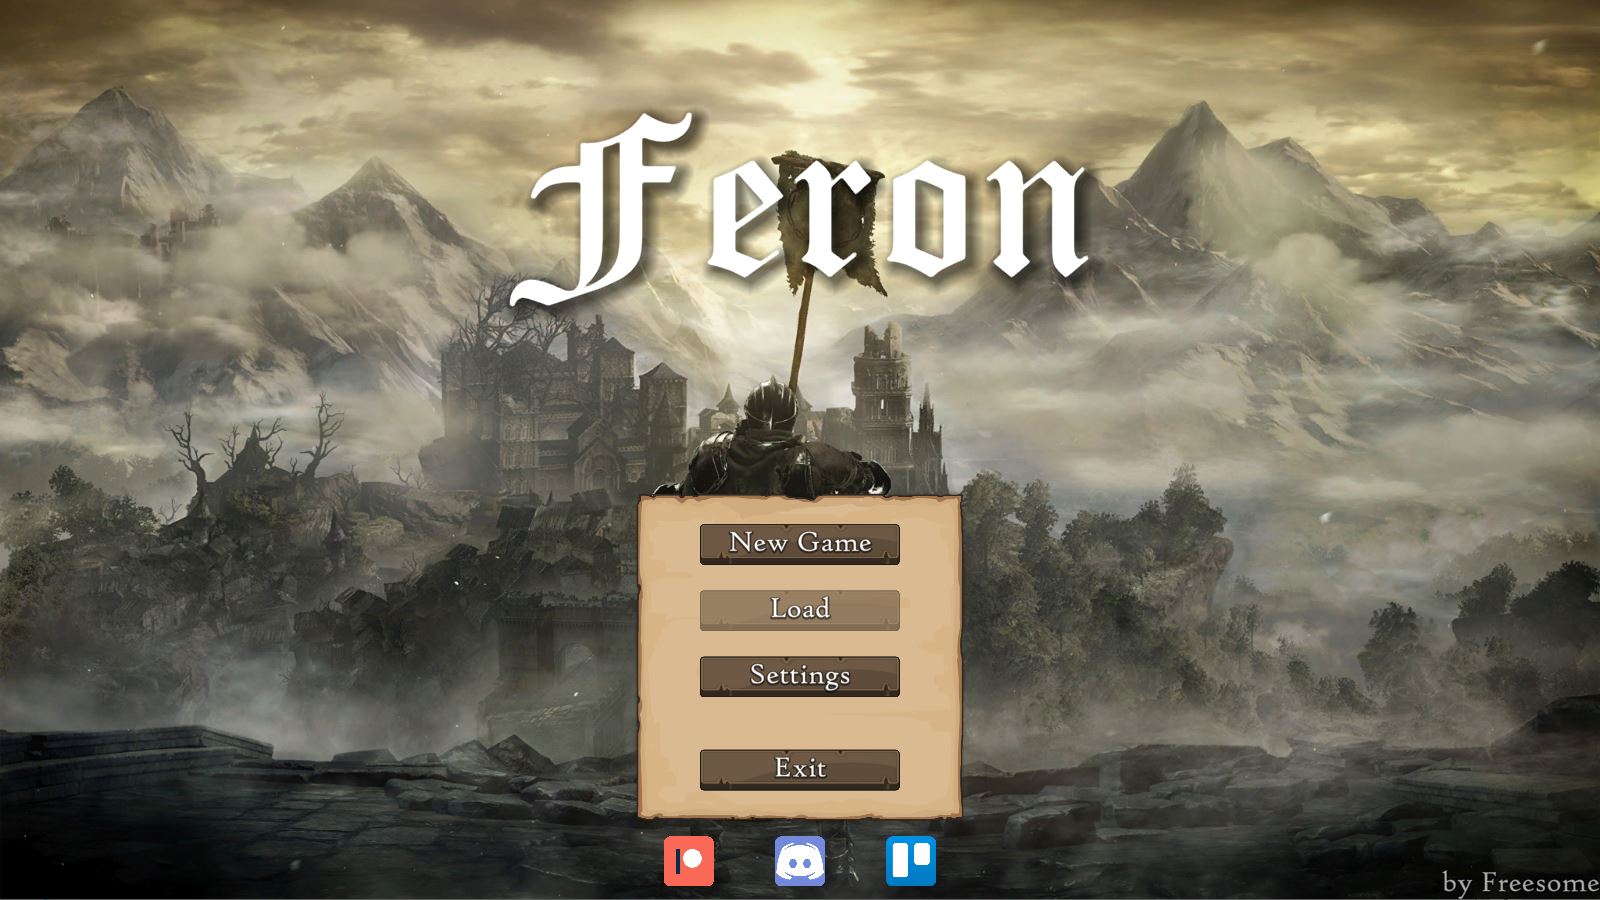 Feorn Xxx Com - Unity] Feron - vTech Demo by Freesom 18+ Adult xxx Porn Game Download